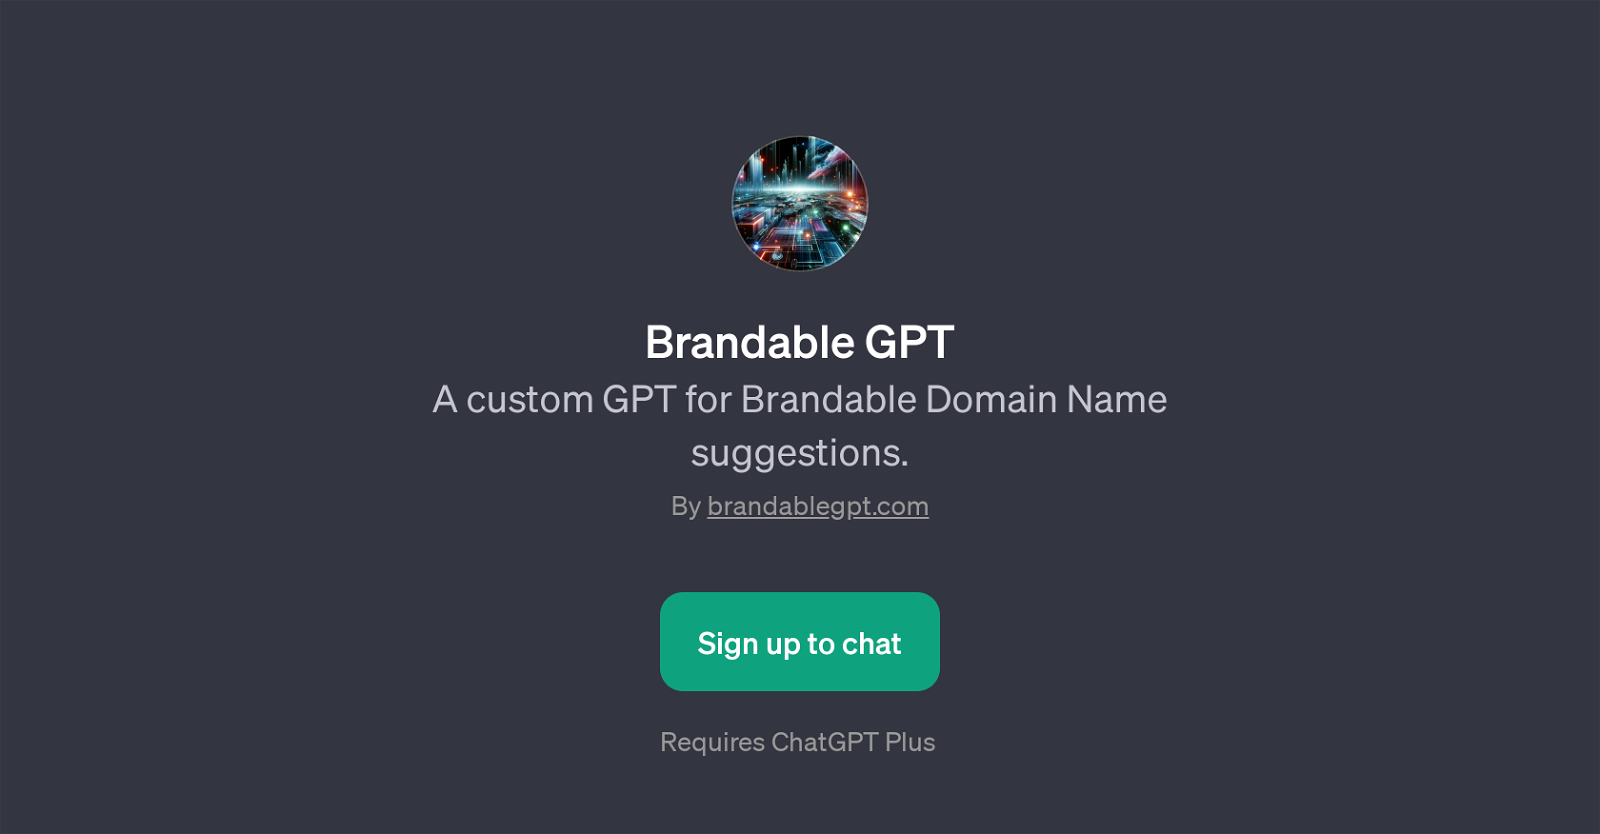 Brandable GPT website